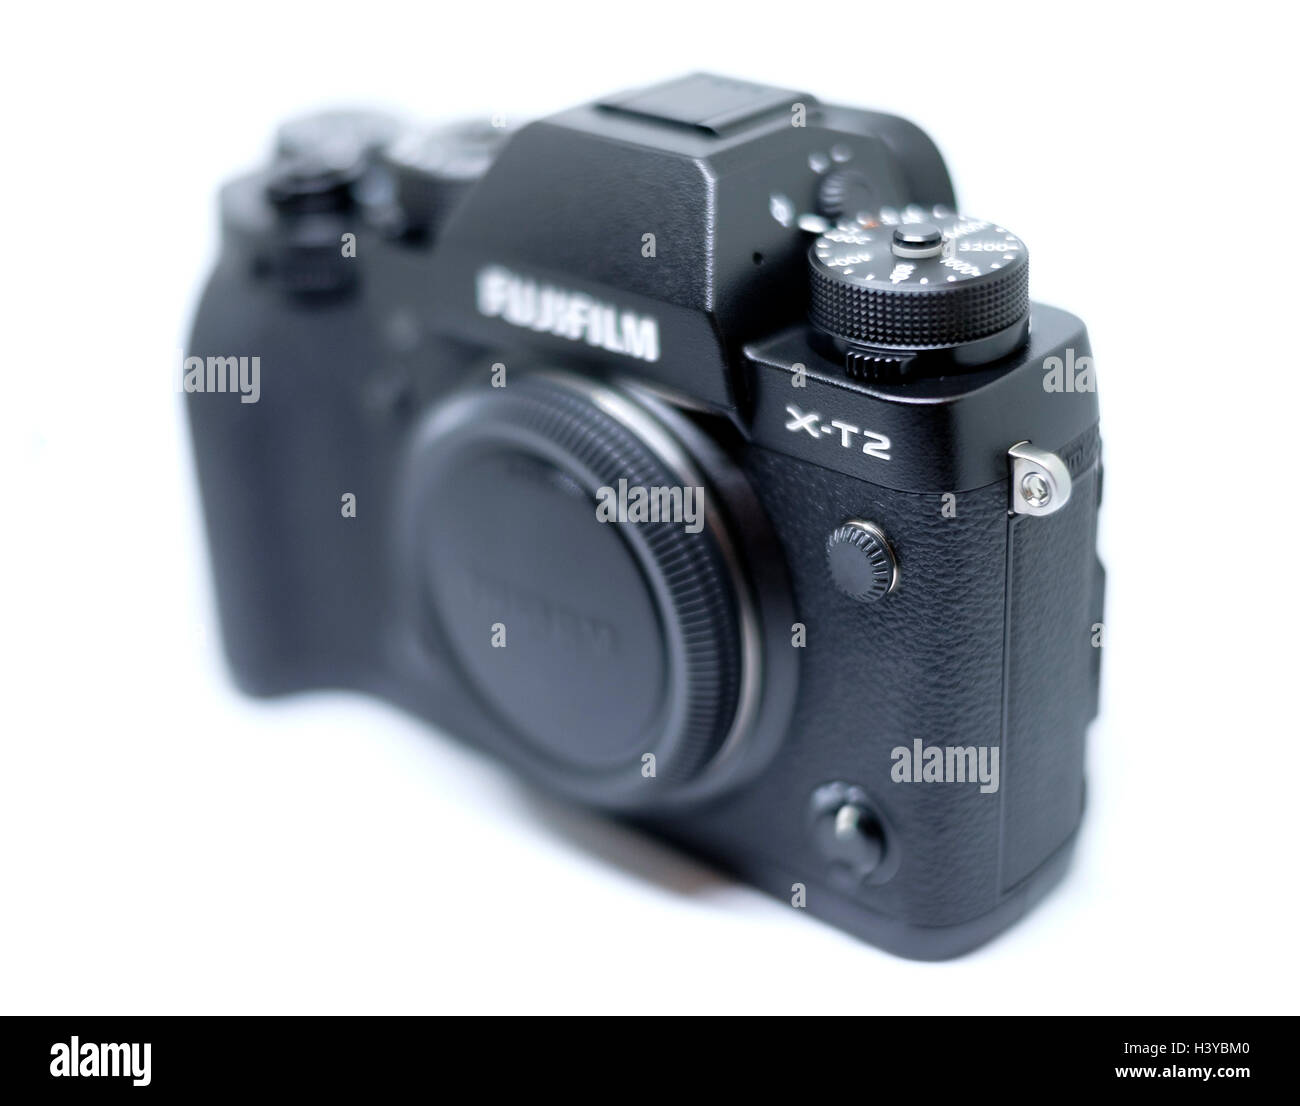 Spiegellose Digitalkamera Fujifilm X-T2 Stockfoto